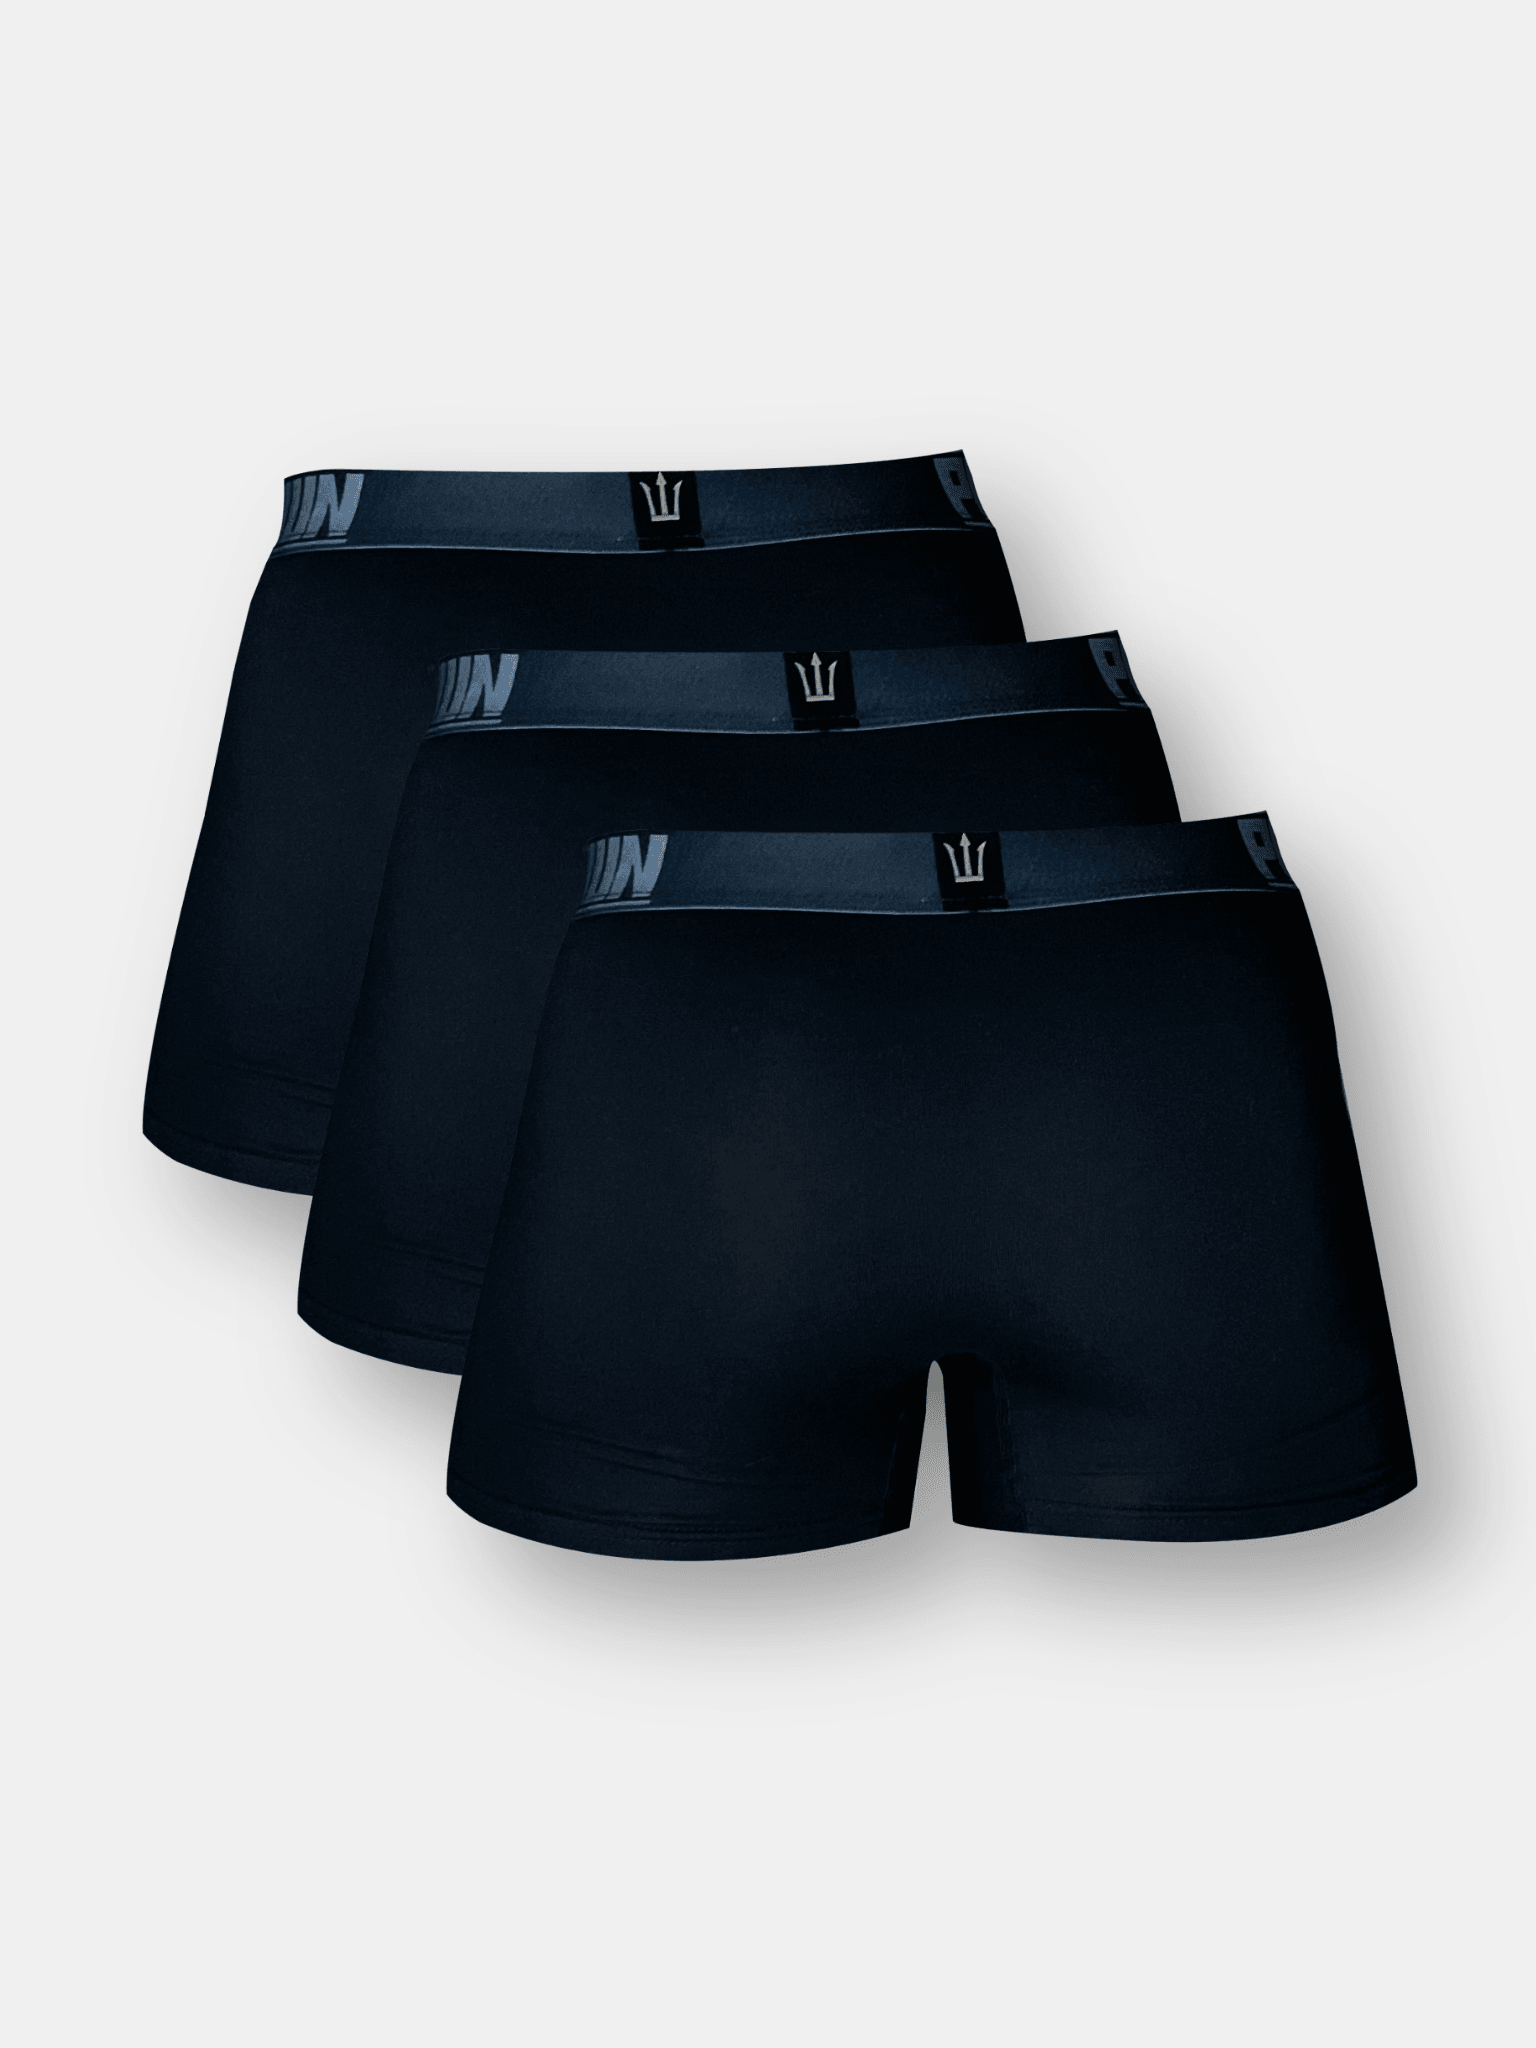 9 KUTU FORCEBOXER Triple | Men Underwear